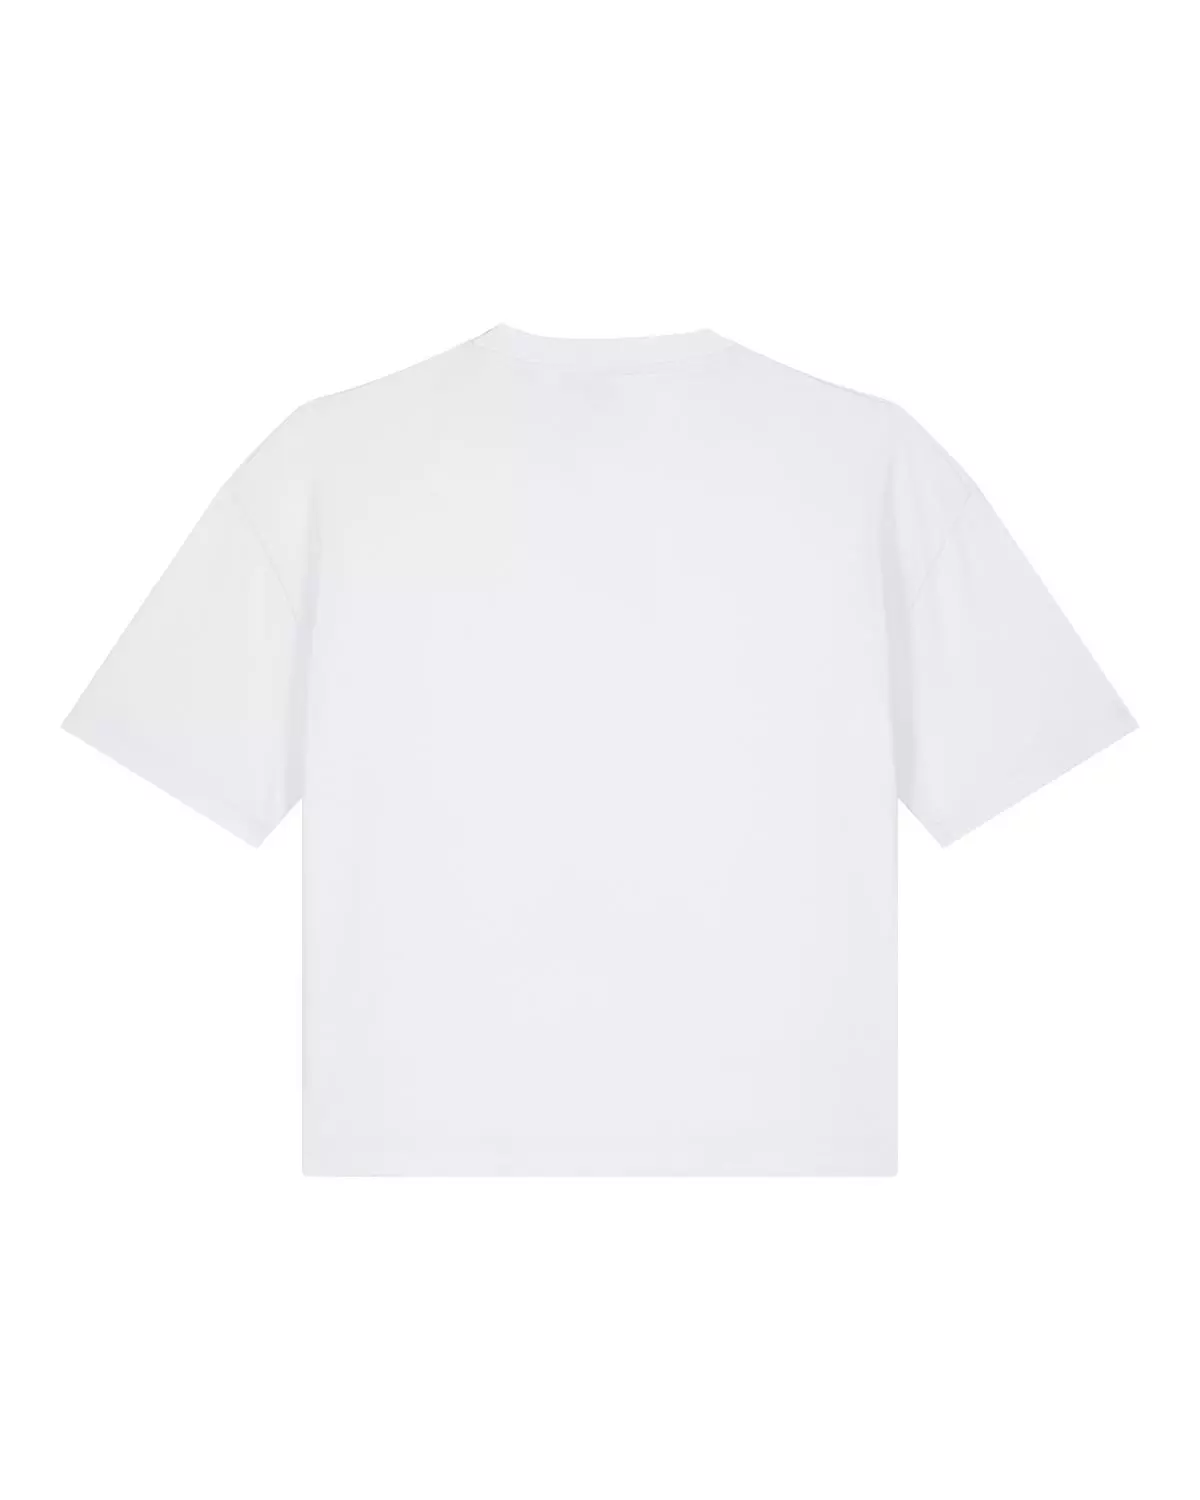 Boxy T-Shirt Modell: Novice